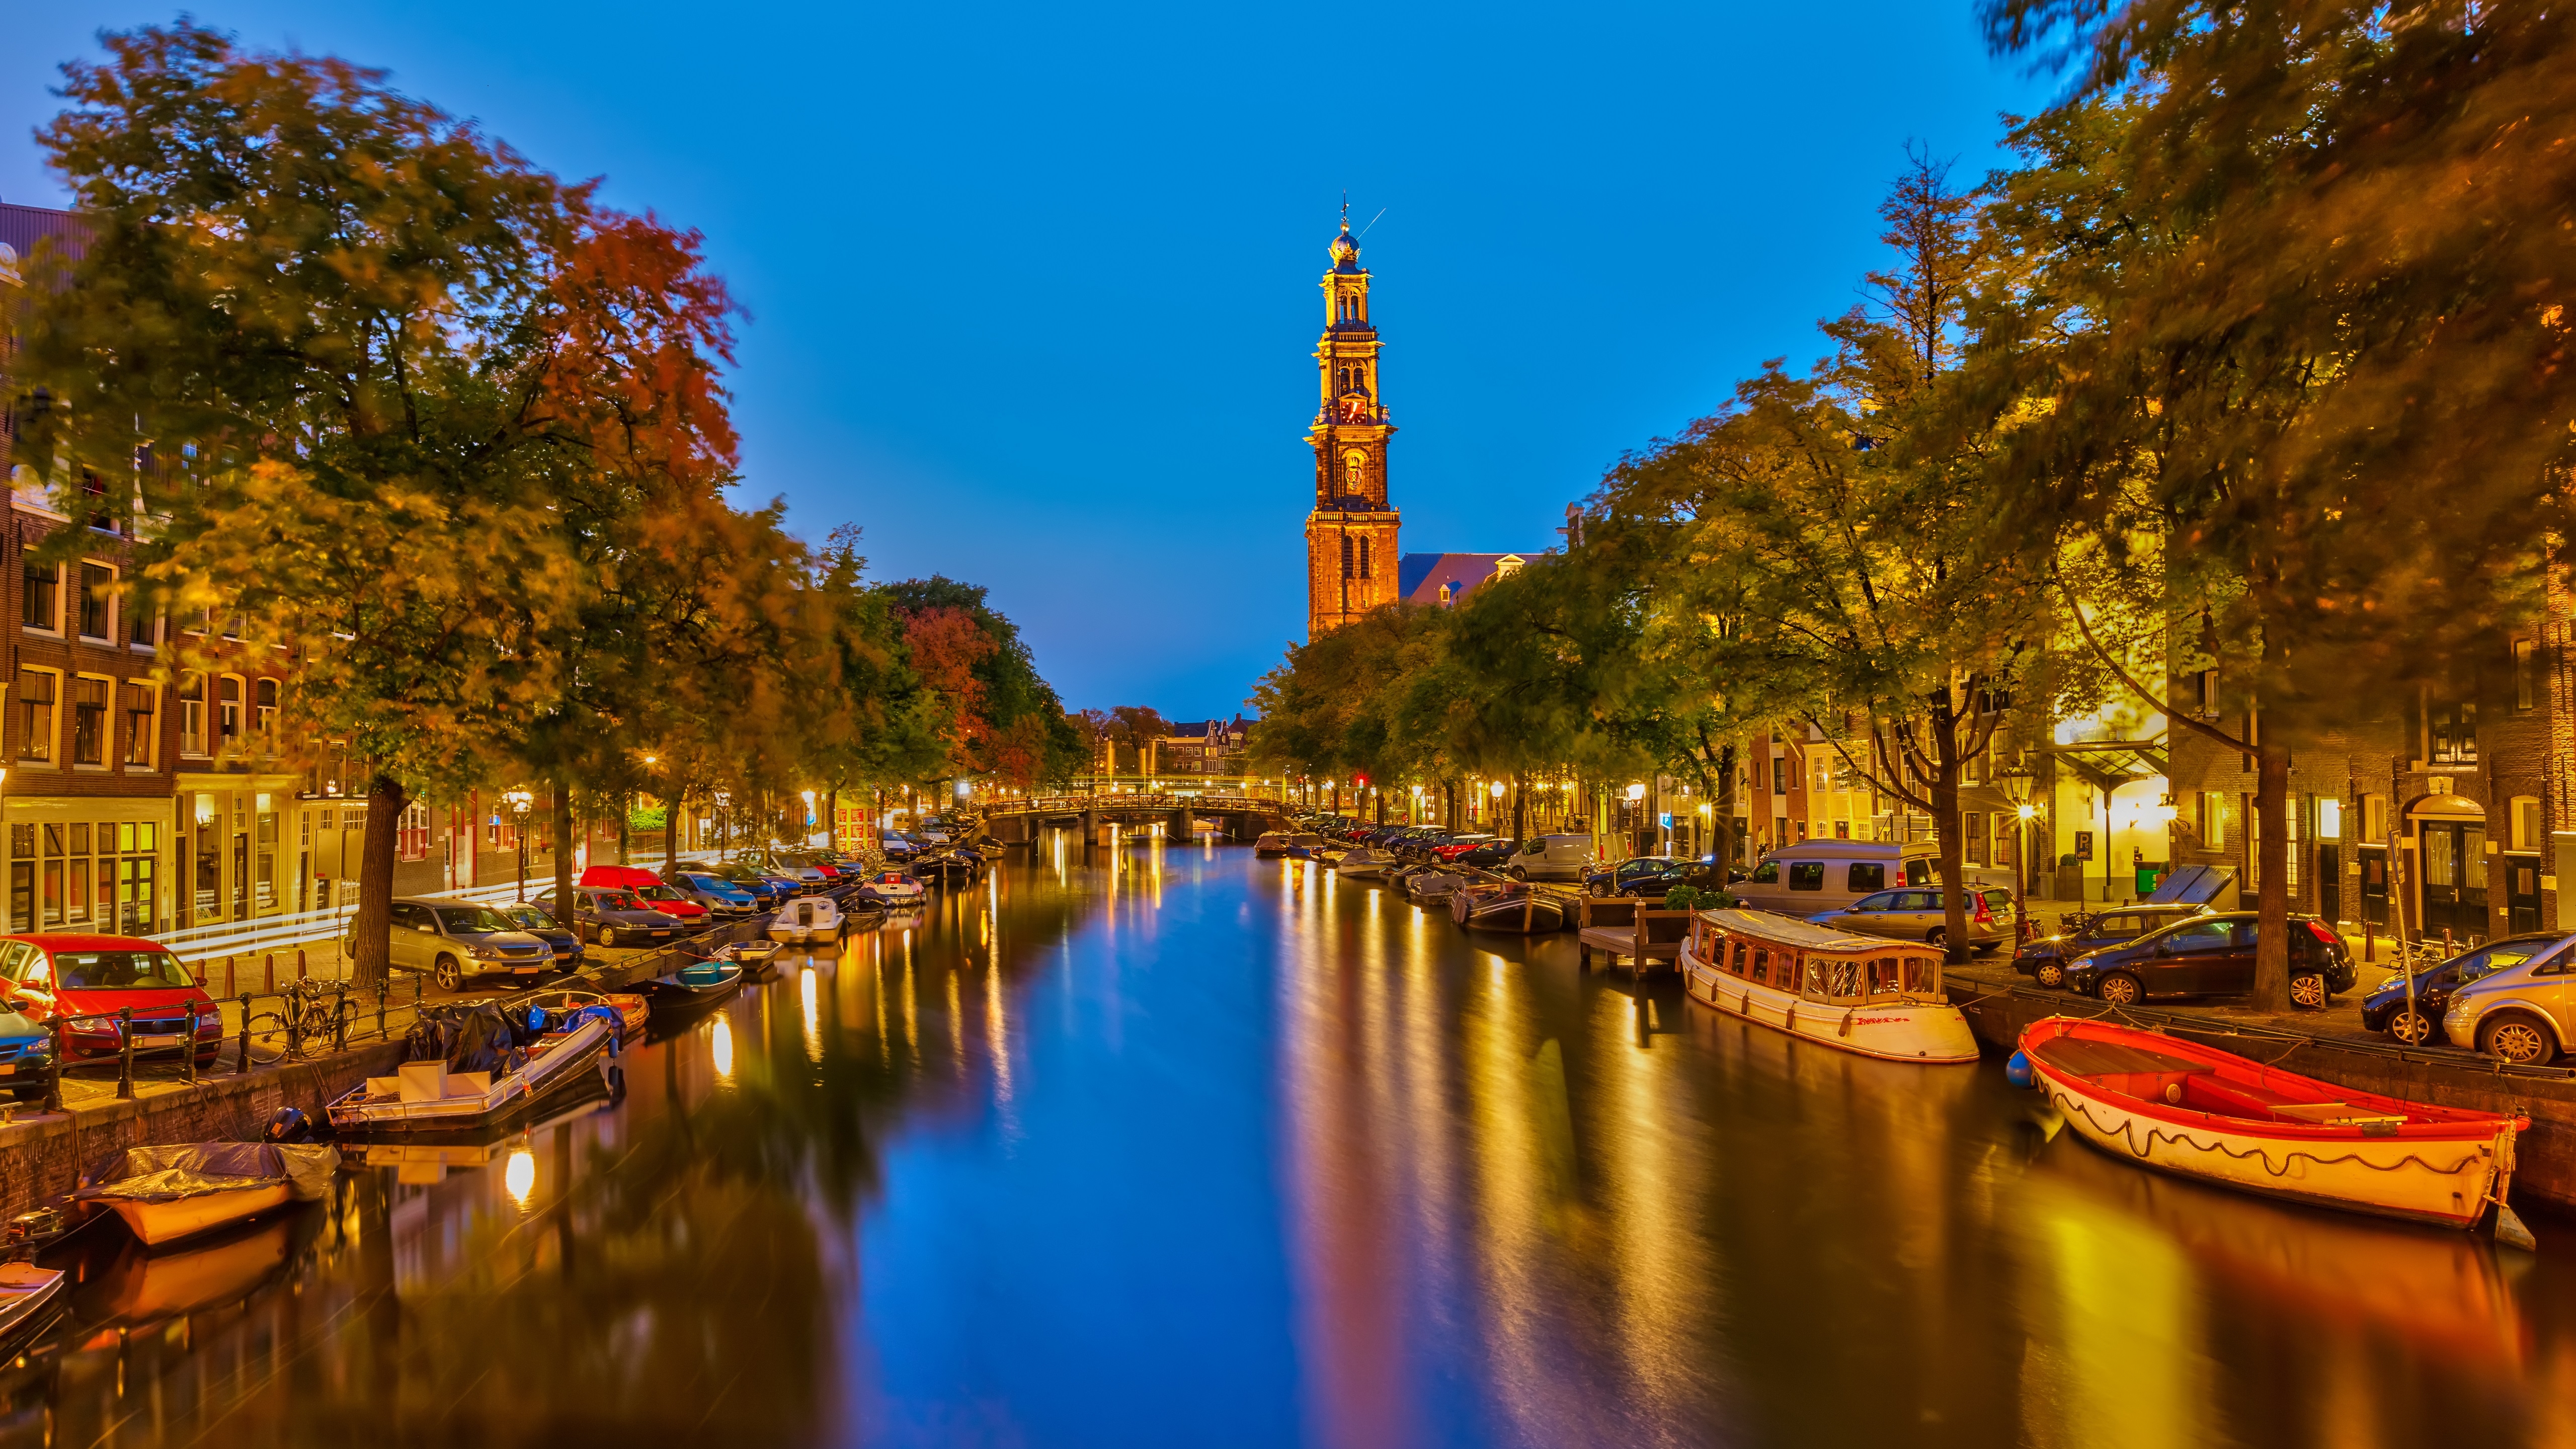 Amsterdam Netherlands for 5120 x 2880 5K Ultra HD resolution